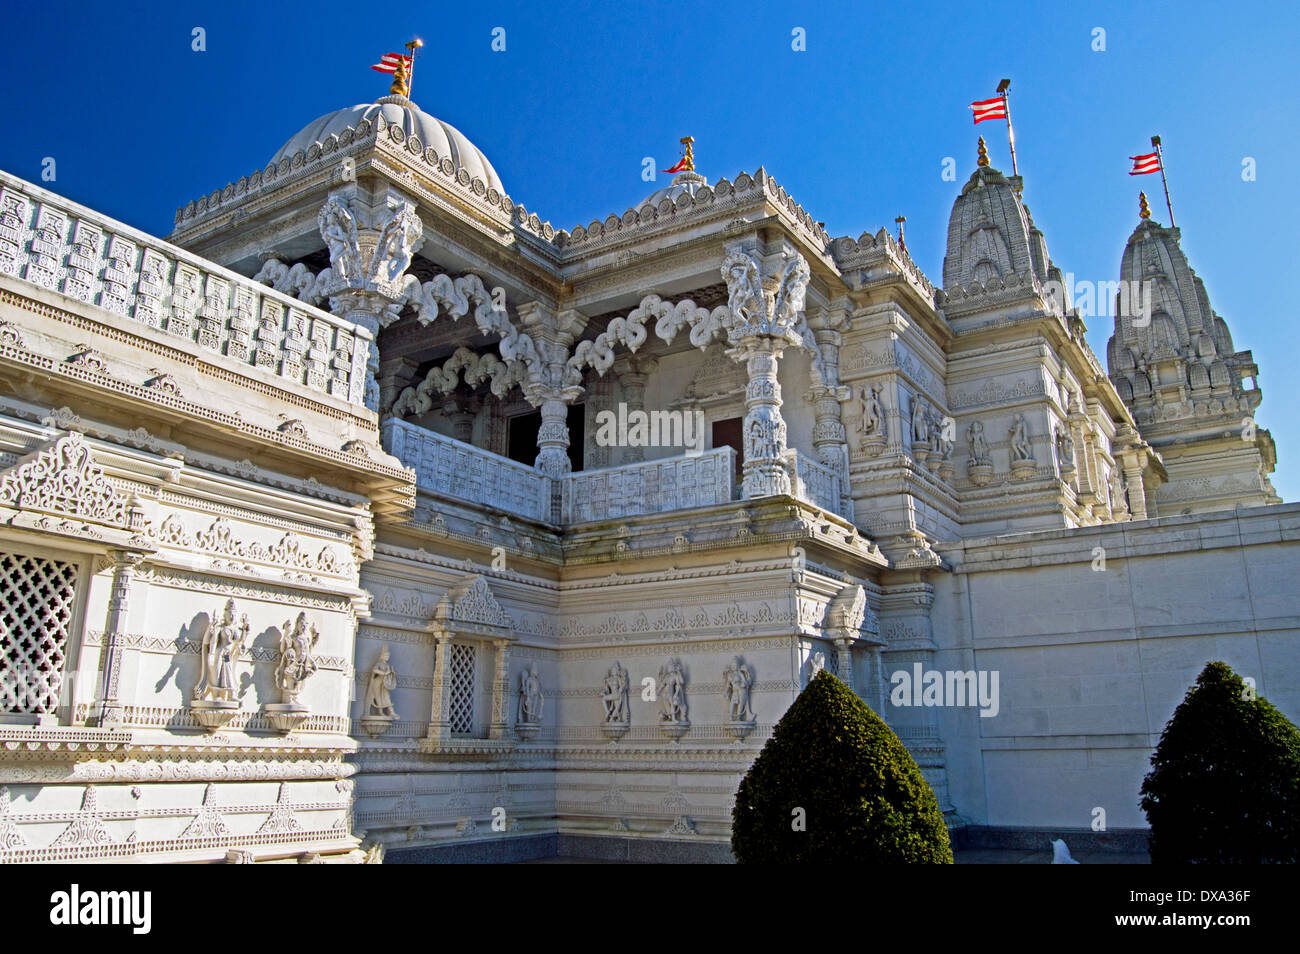 Temple BAPS Shri Swaminarayan Mandir (Temple), la Neasden Neasden, London Borough of Brent, London, Angleterre, Royaume-Uni Banque D'Images